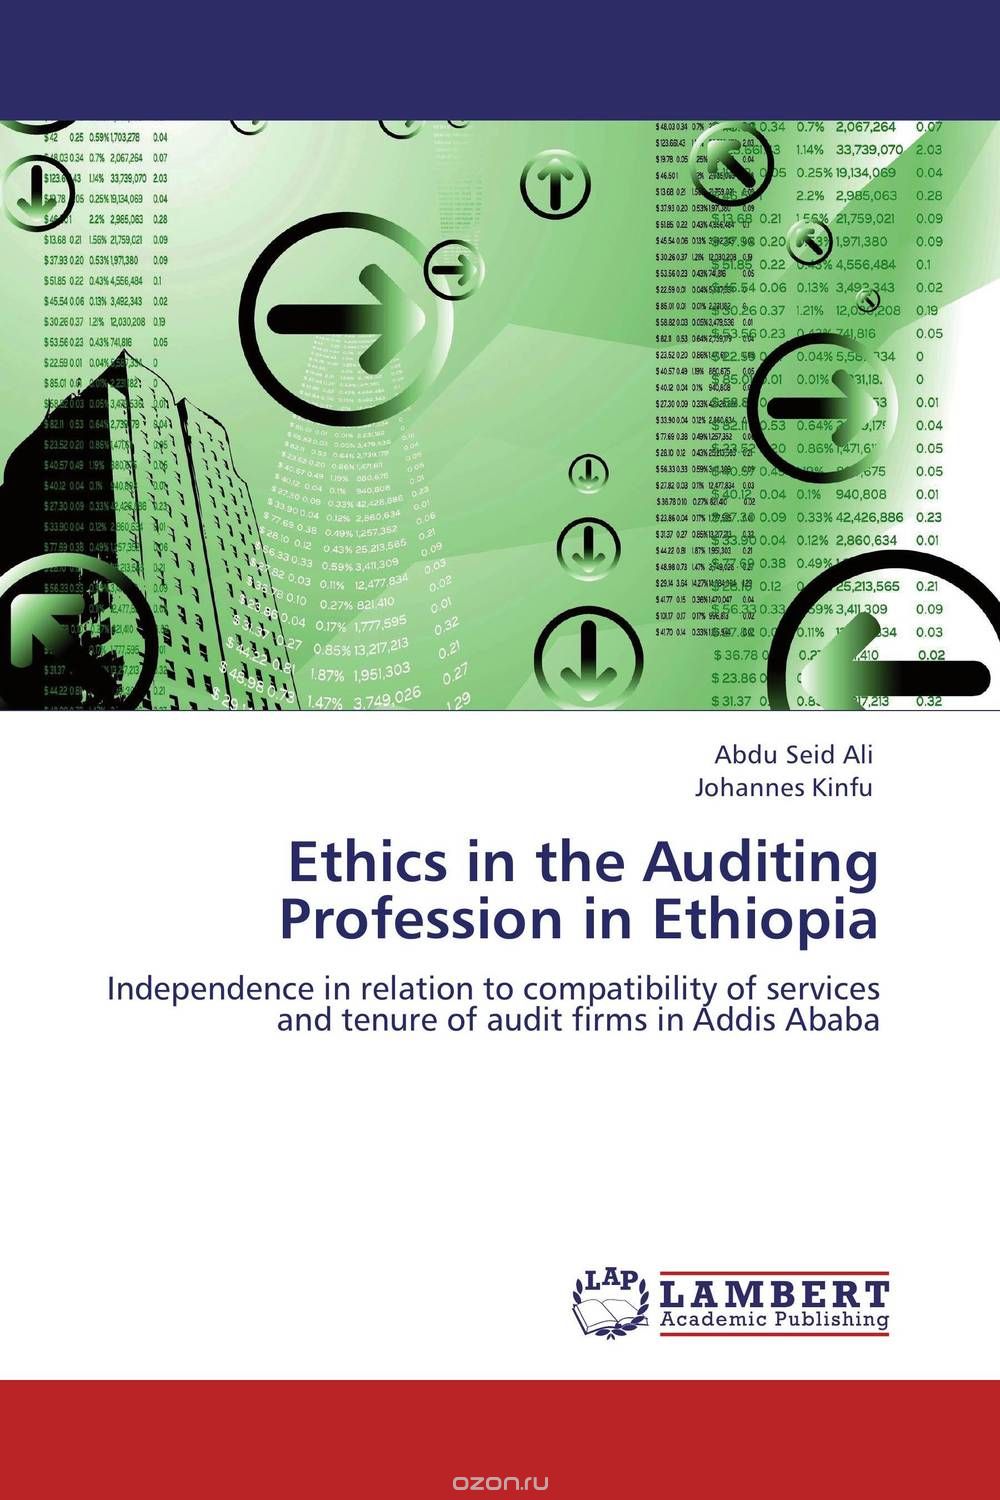 Скачать книгу "Ethics in the Auditing Profession in Ethiopia"